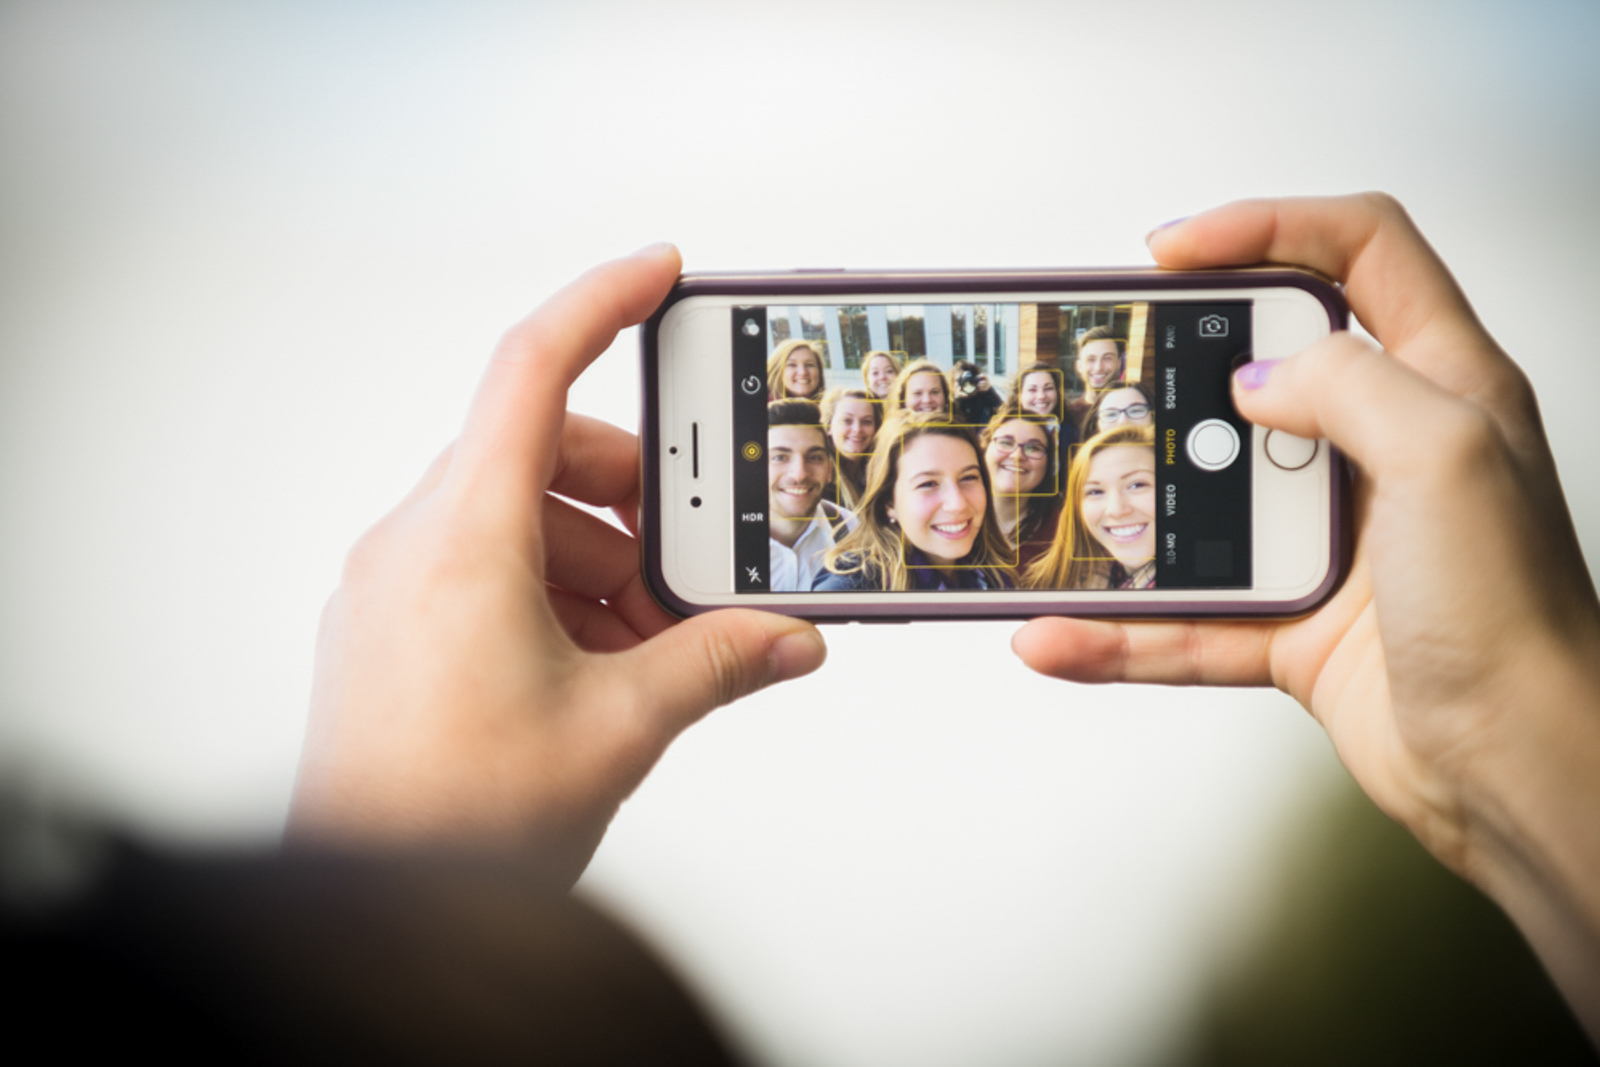 Photo os a group selfie taken on a cellphone